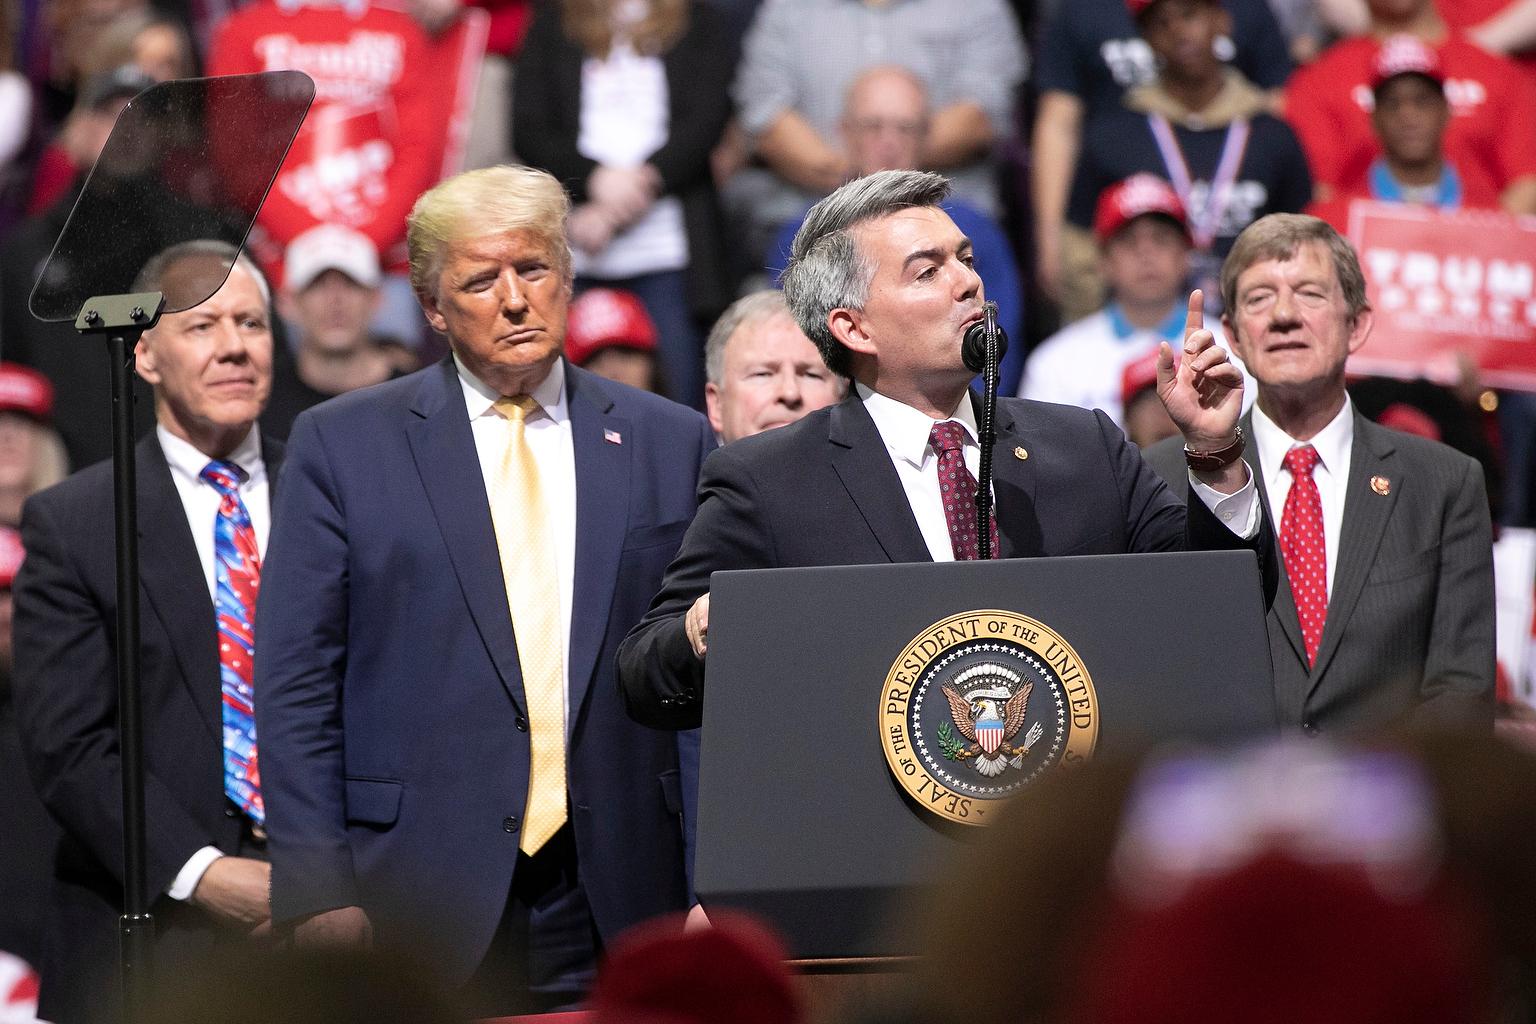 Donald Trump Rally In Colorado Springs With Gardner